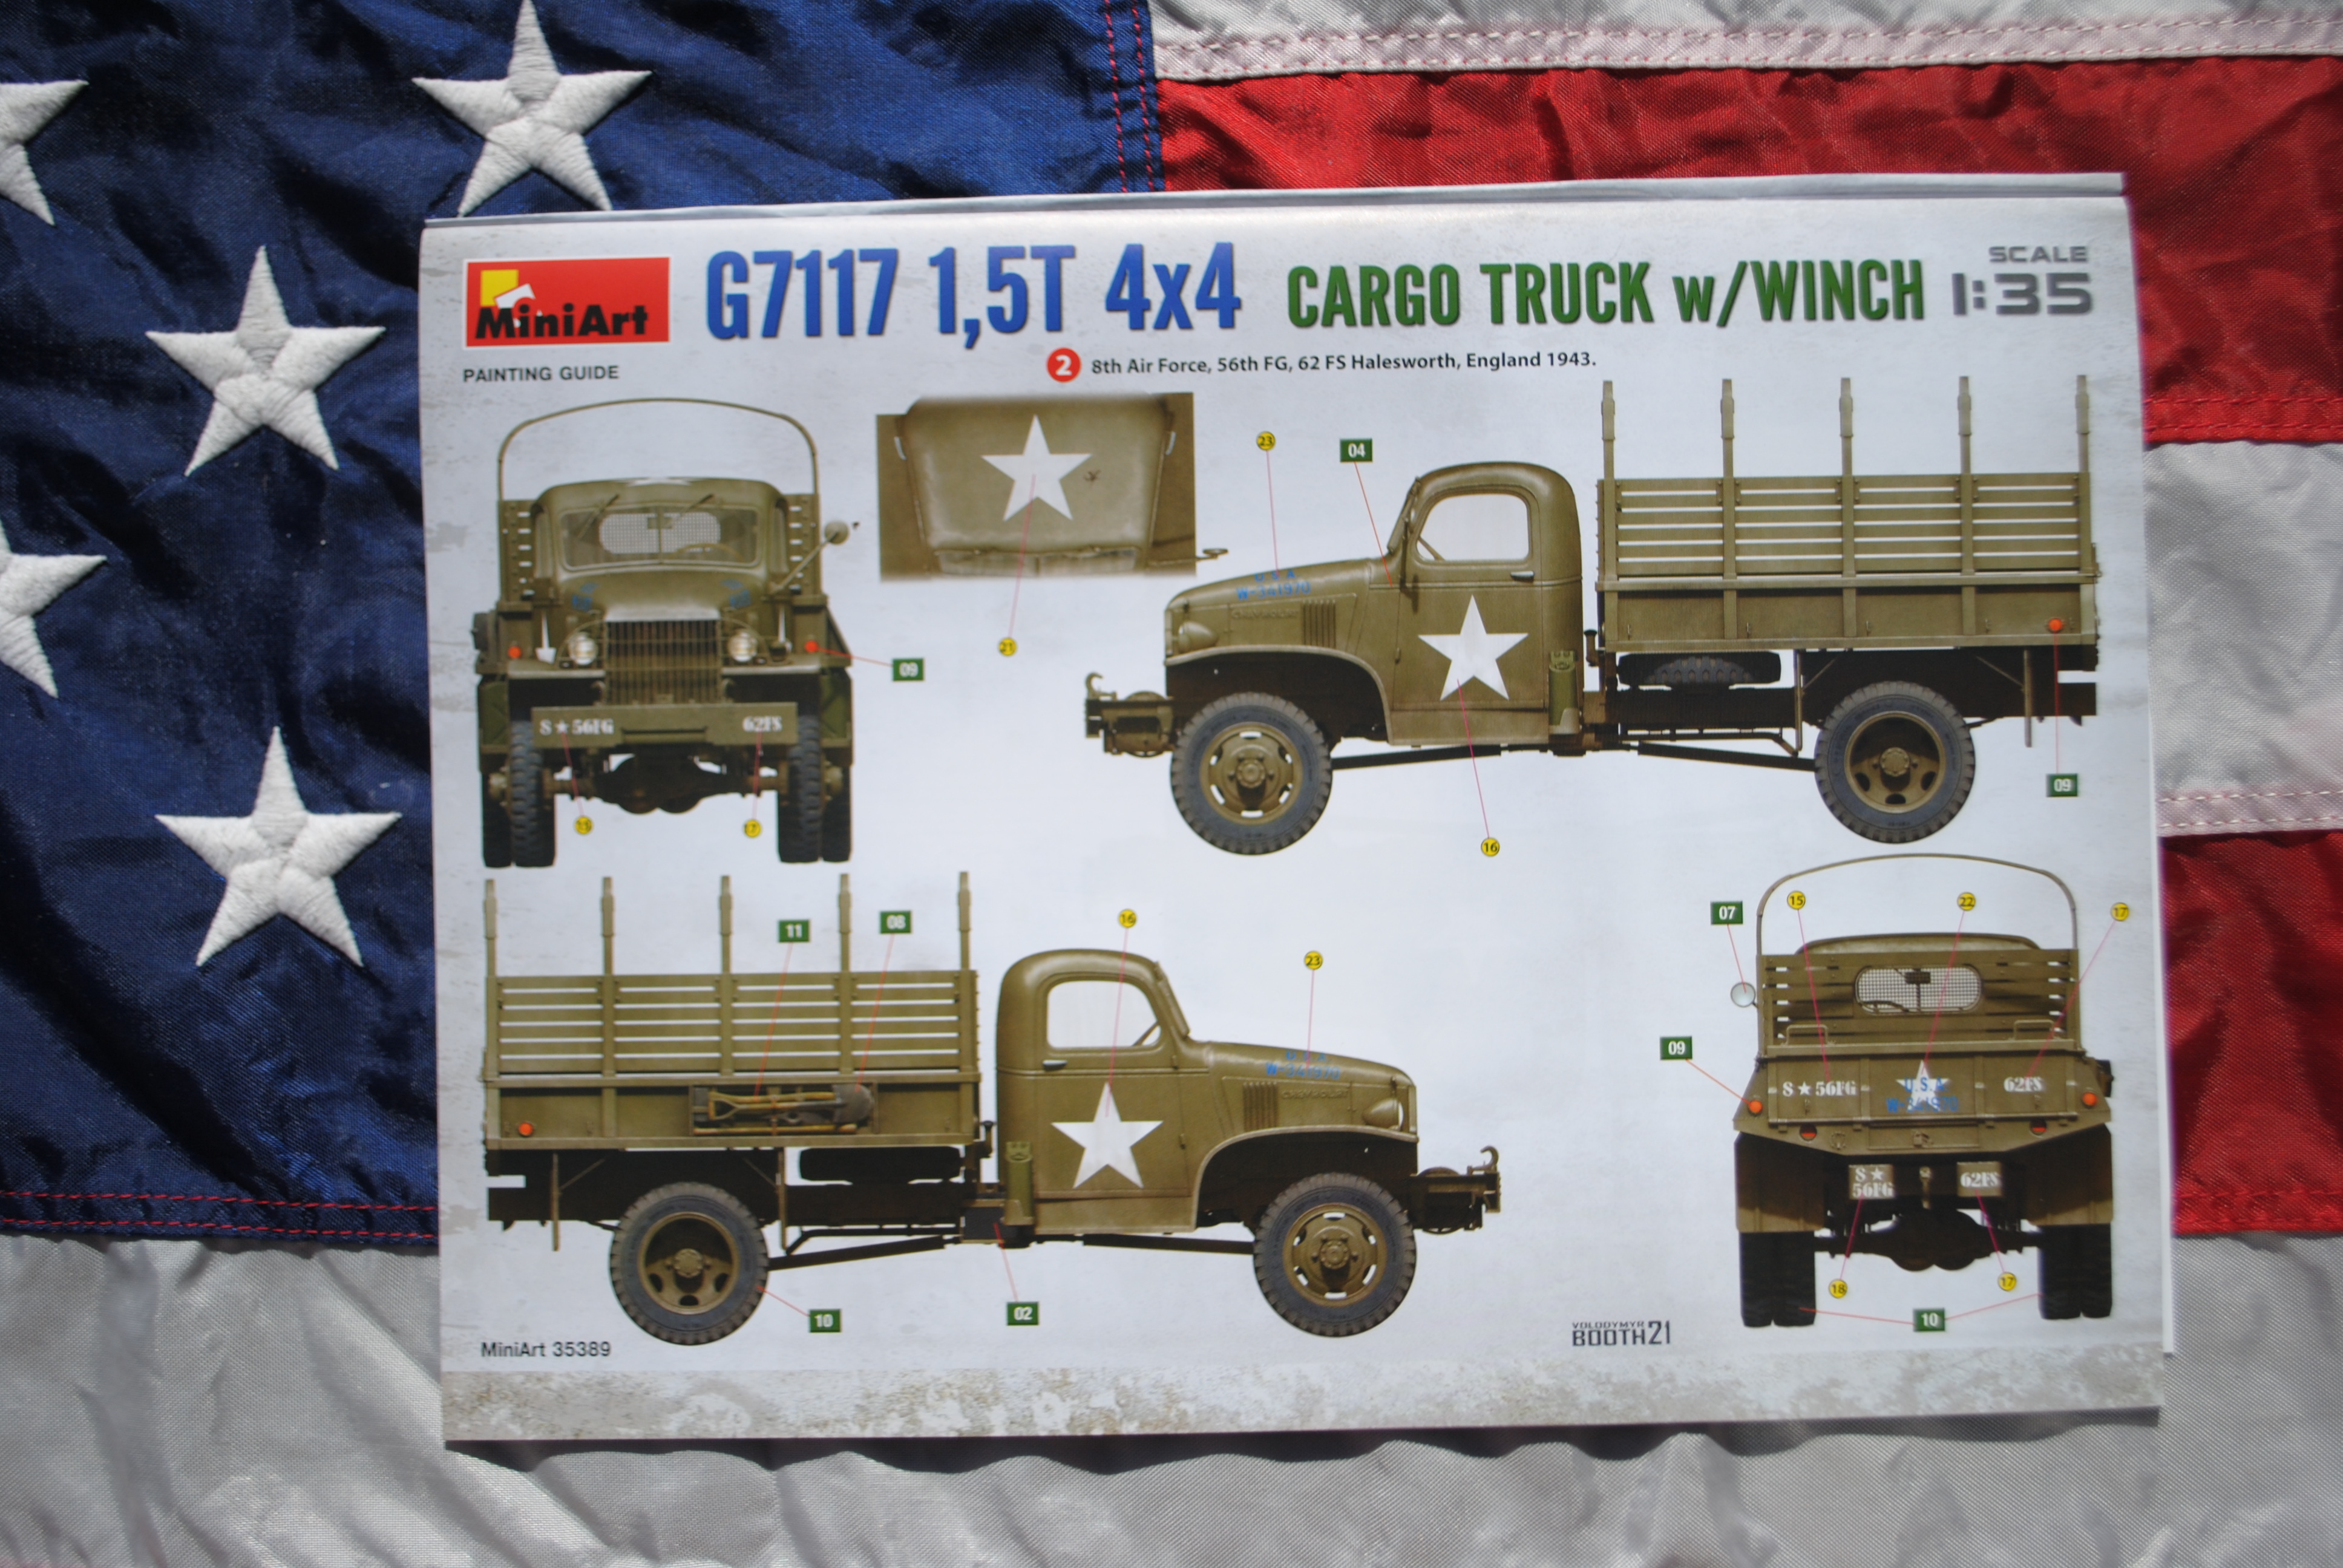 Mini Art 35389 G7117 1,5T 4×4 CARGO TRUCK w/WINCH